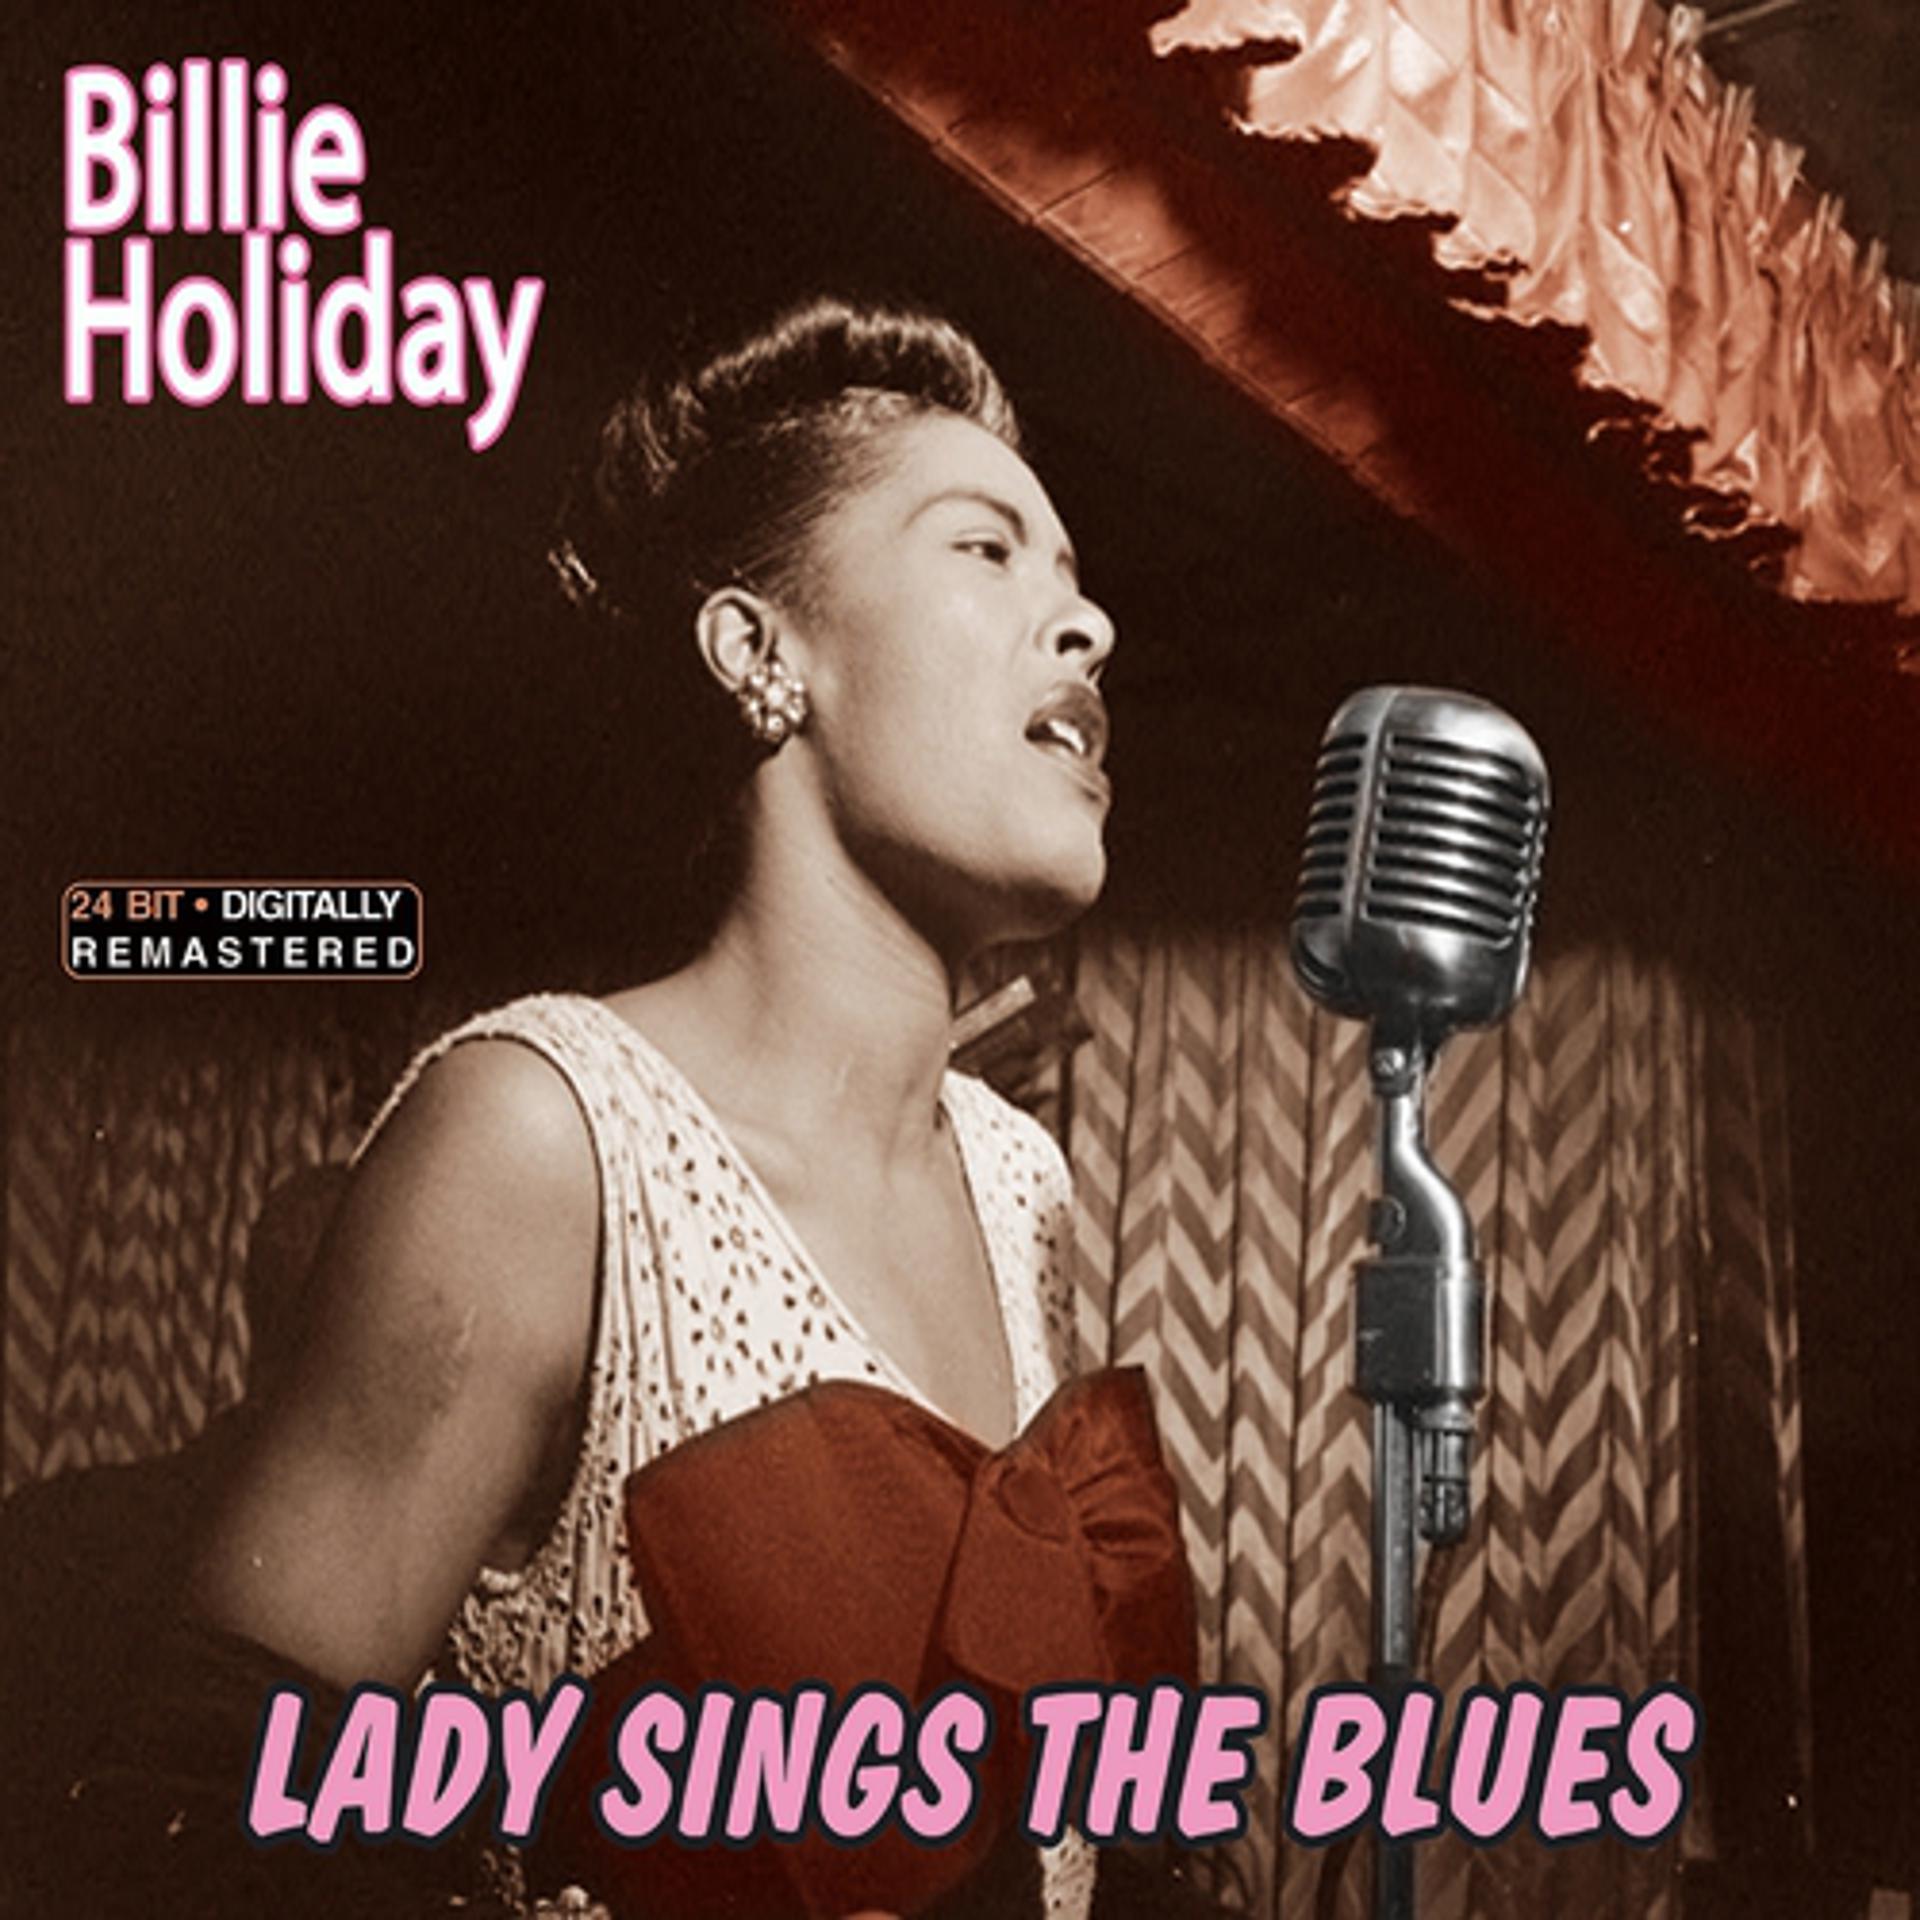 Lady Sings. 2009-Lady Sings the Blues - -Billie Holiday. Холидей песня. Билли Холидей Википедия.